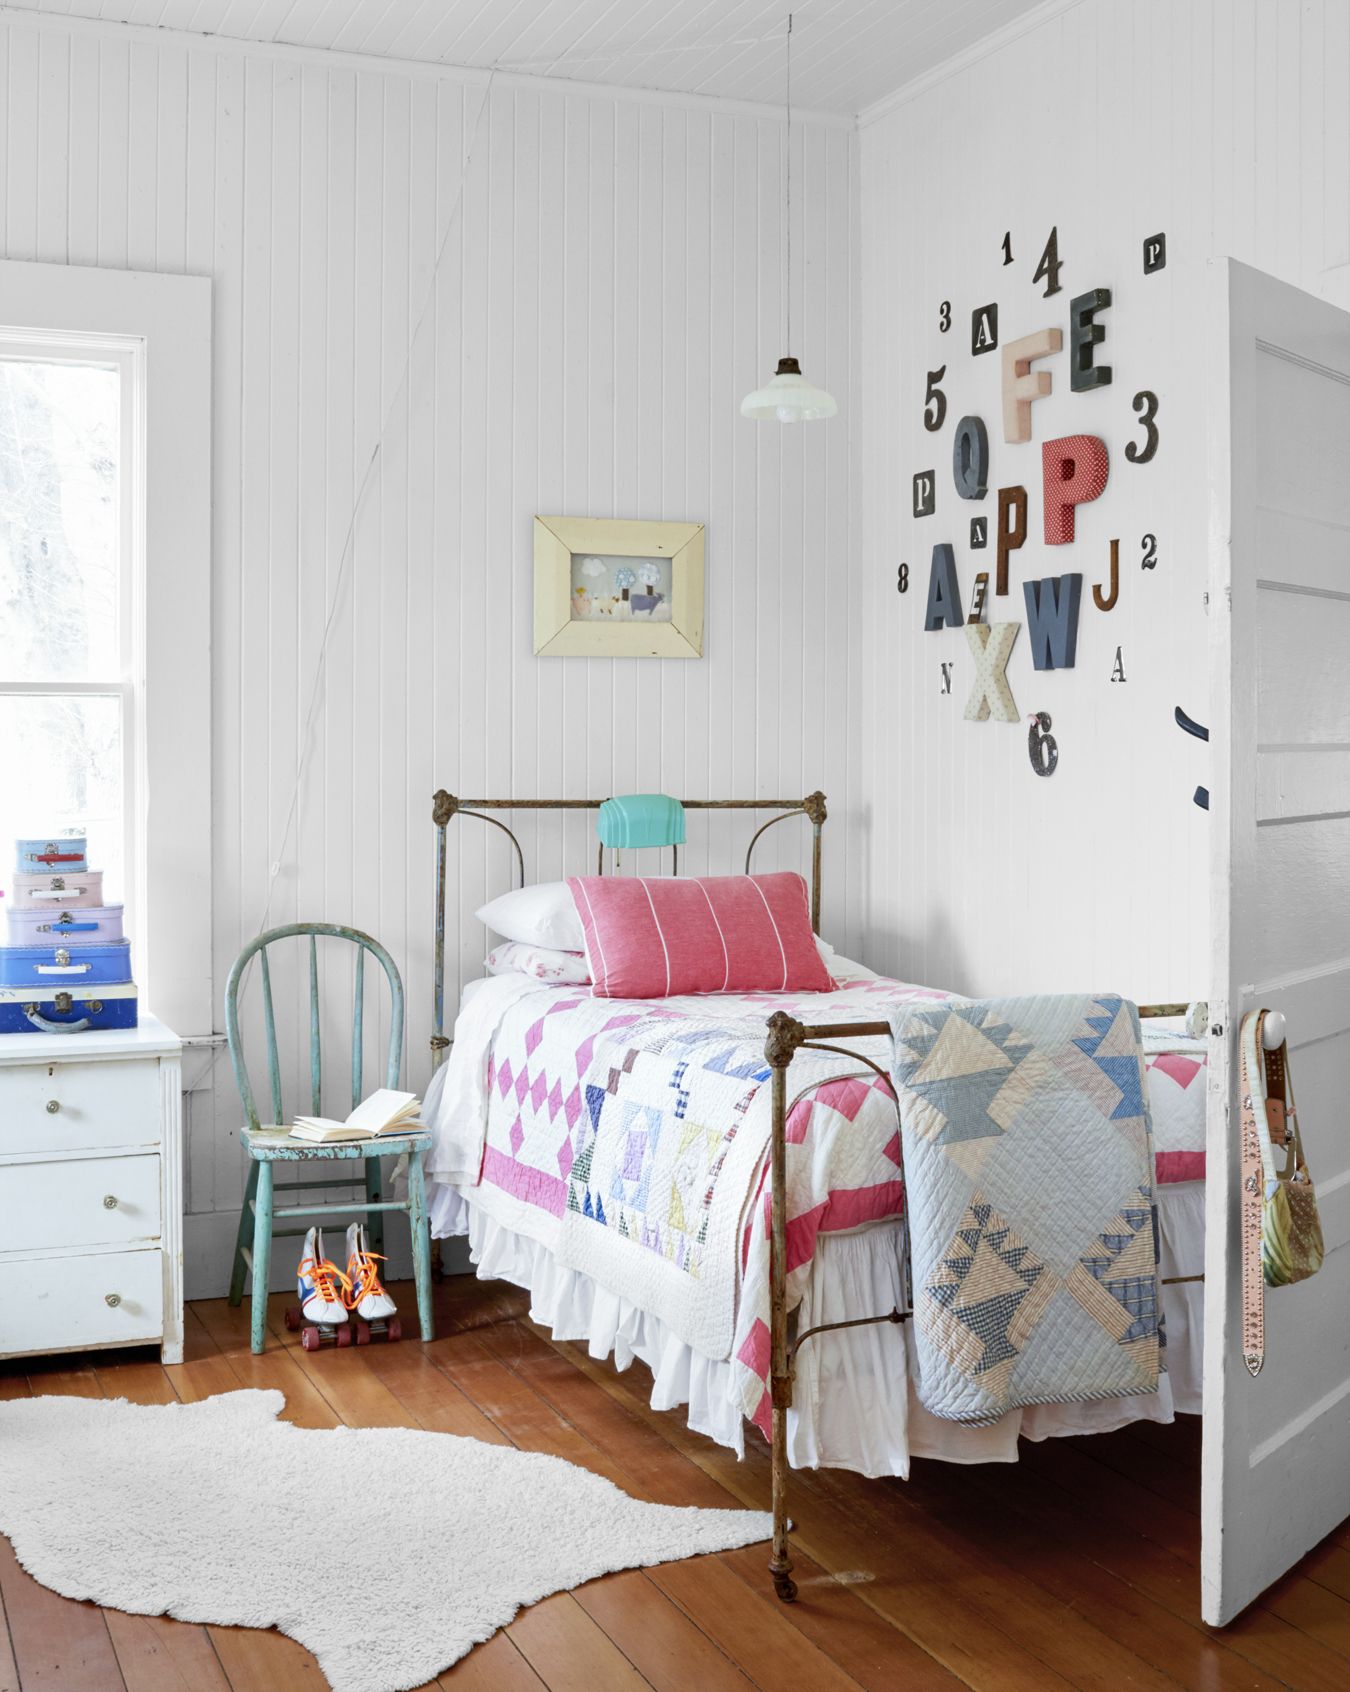 50 Kids Room Decor Ideas Bedroom Design And Decorating